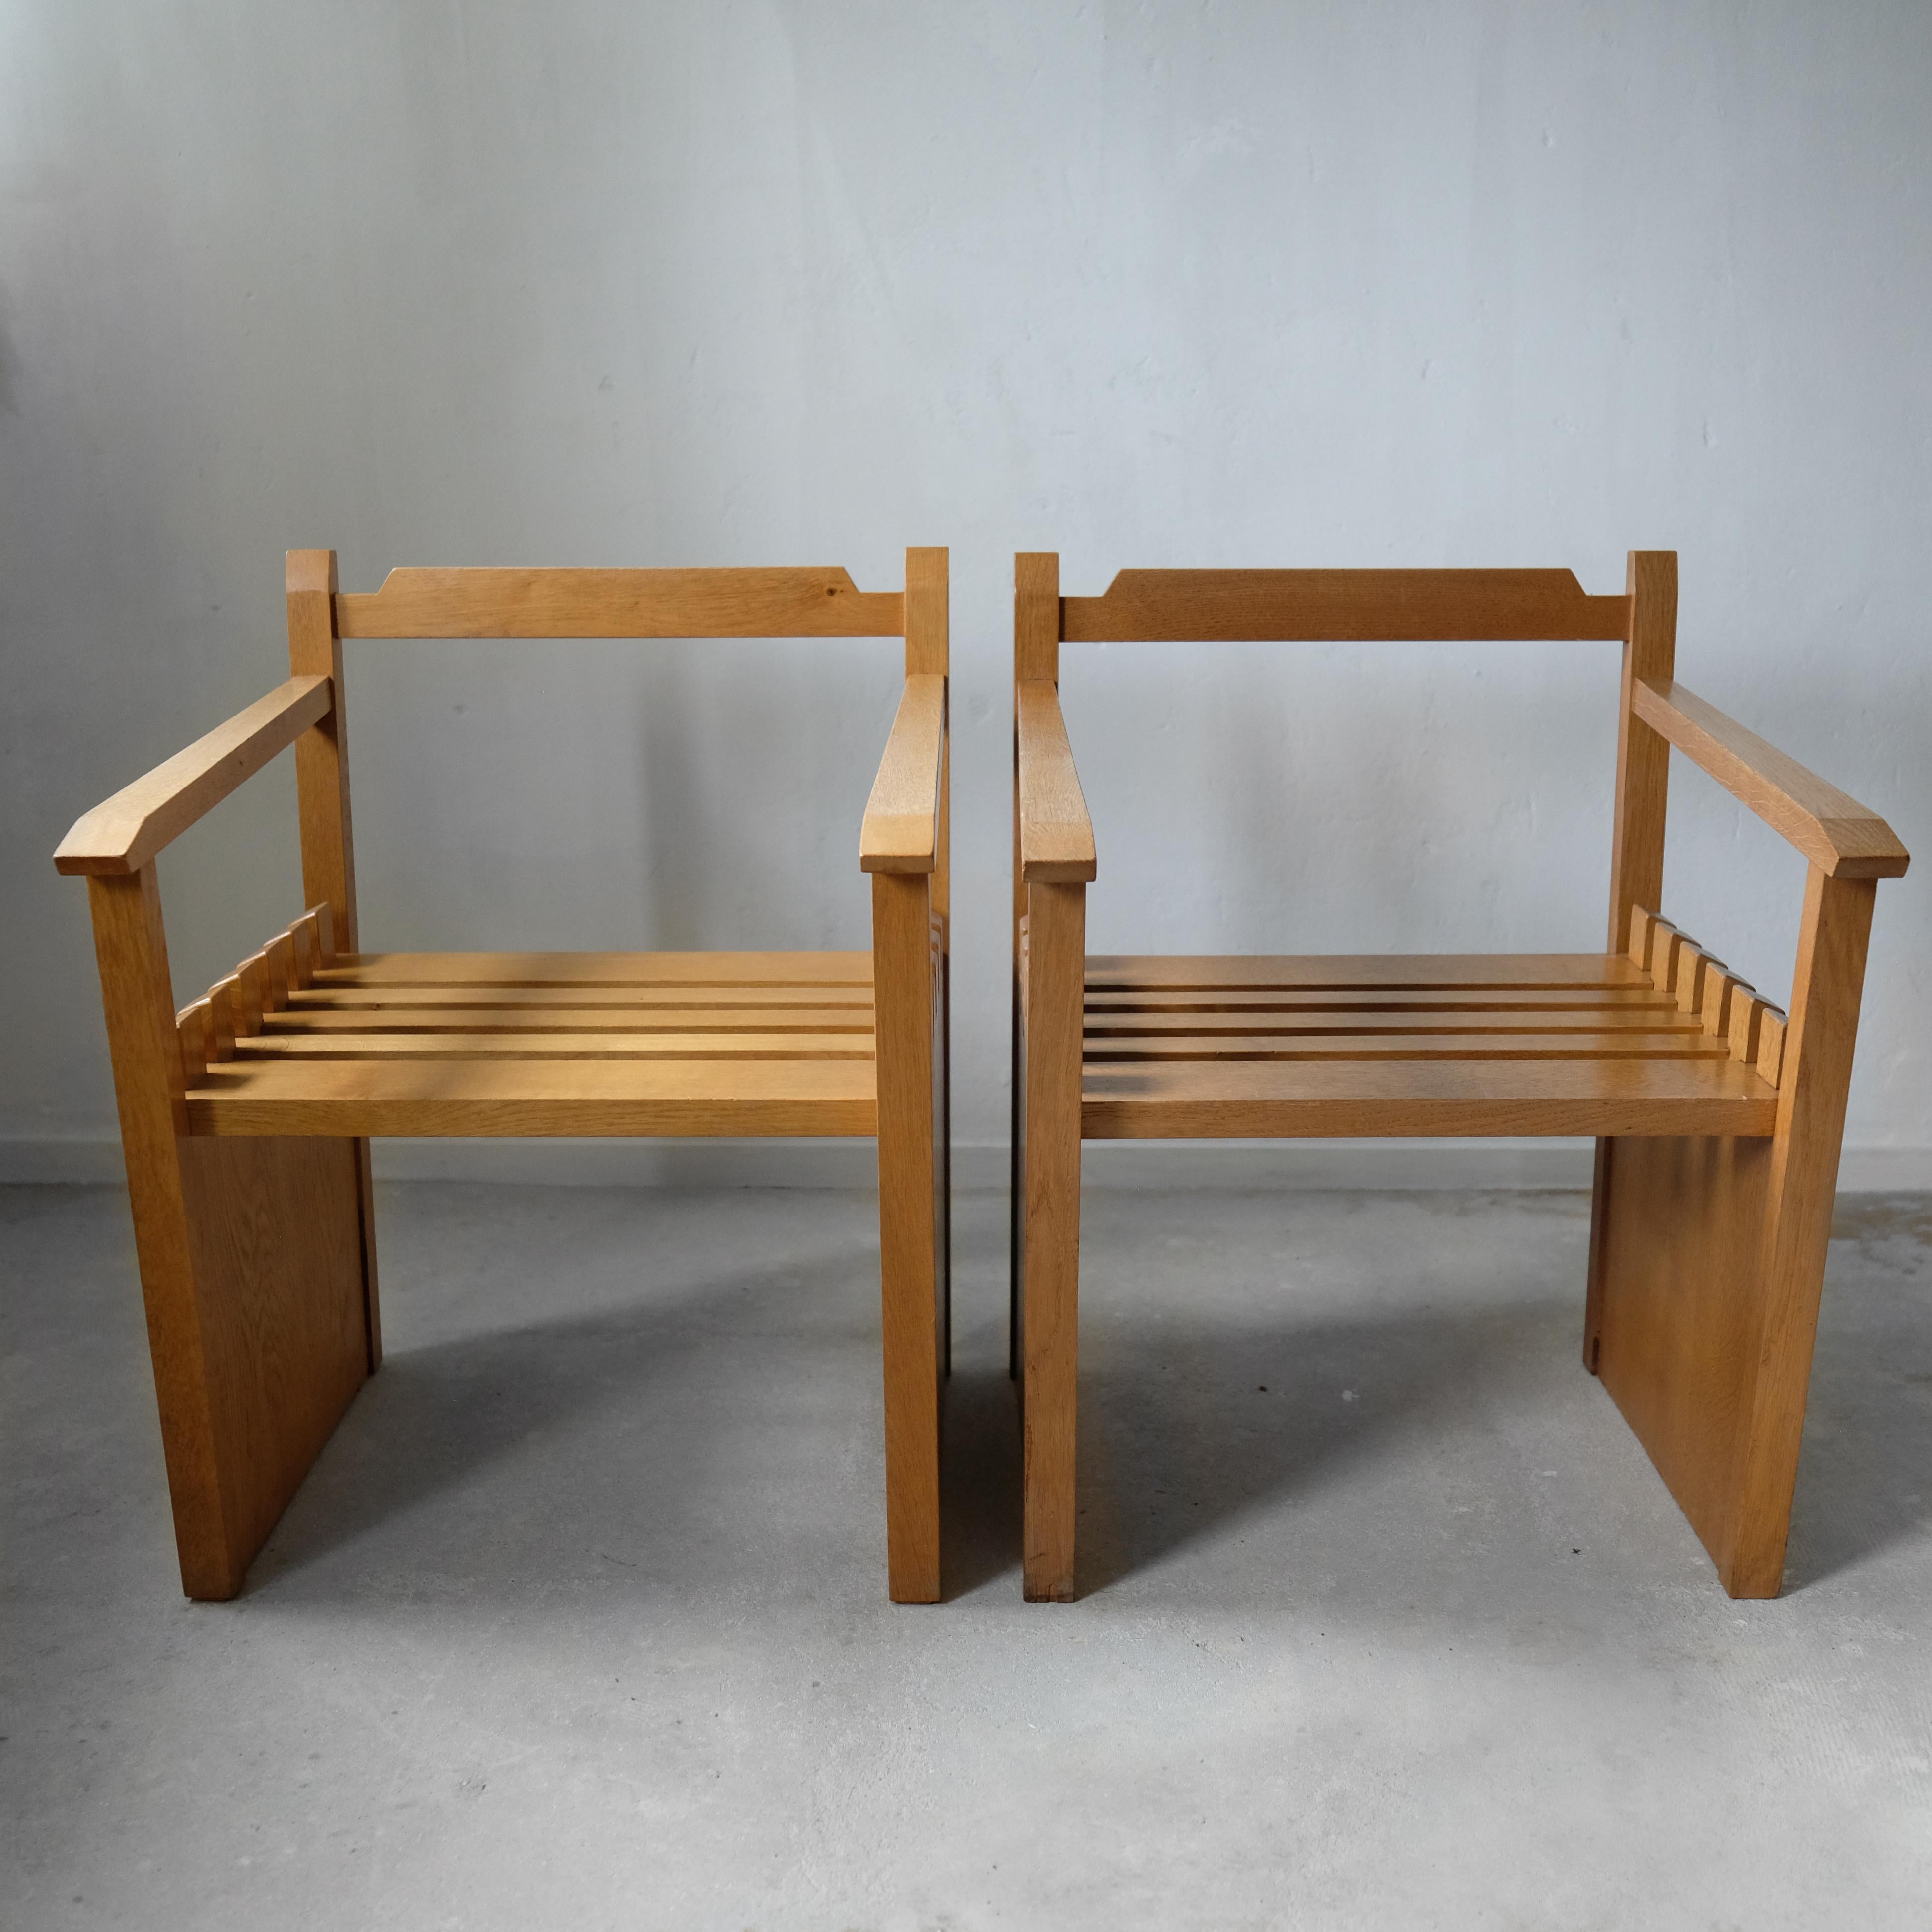 Modernist oak wood side chairs, France, 1970s.